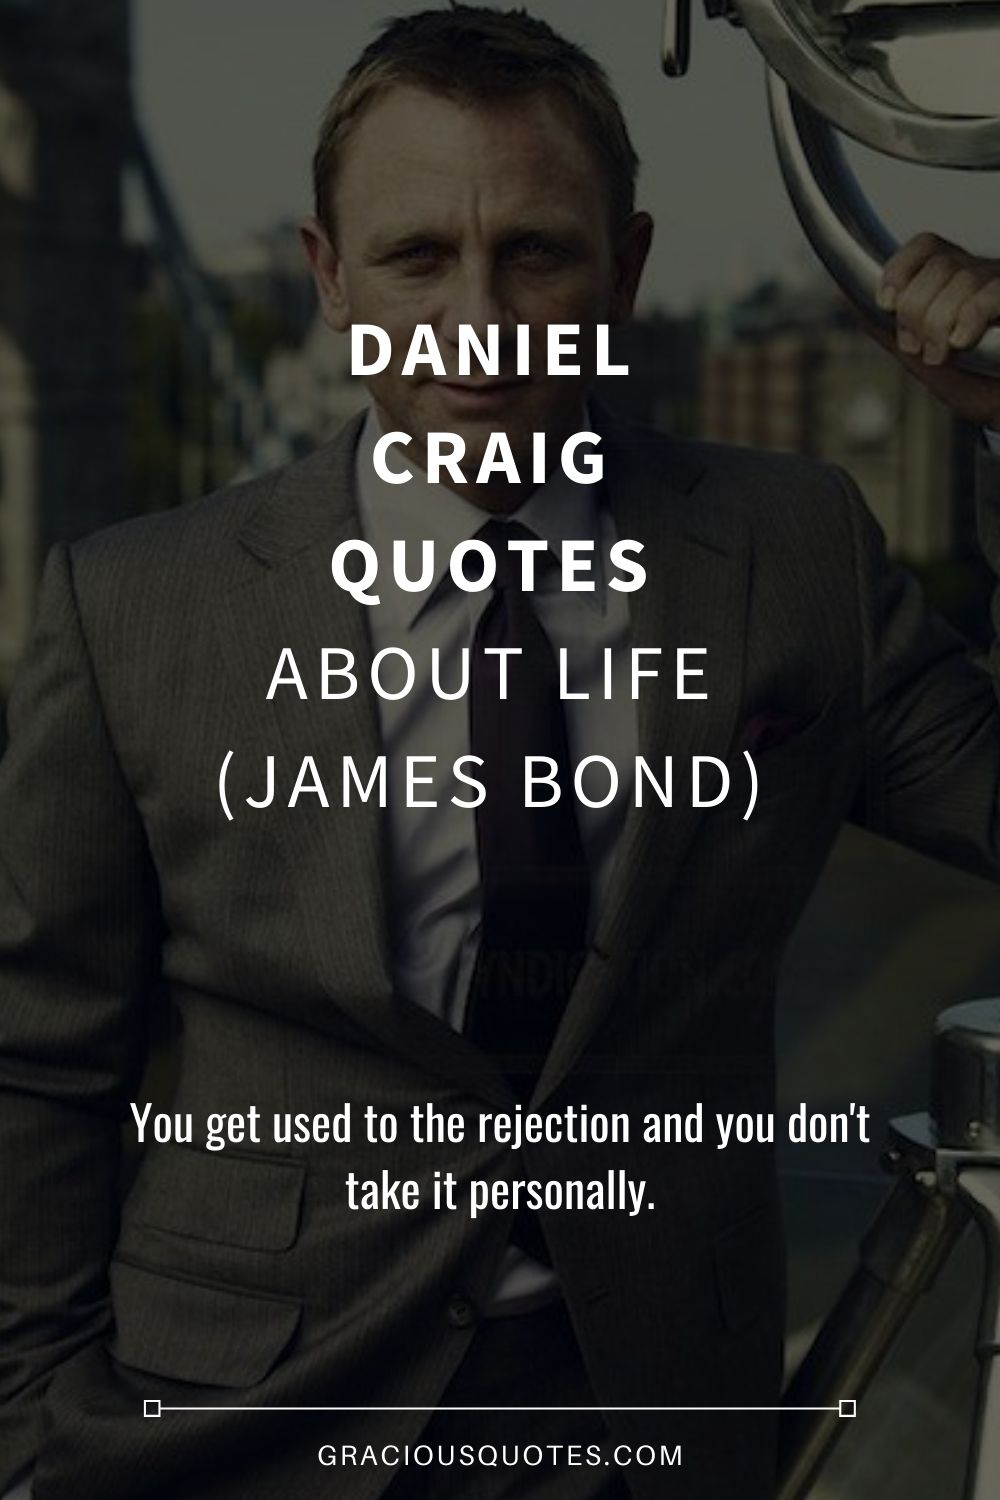 Daniel Craig News, Photos, Quotes, Video